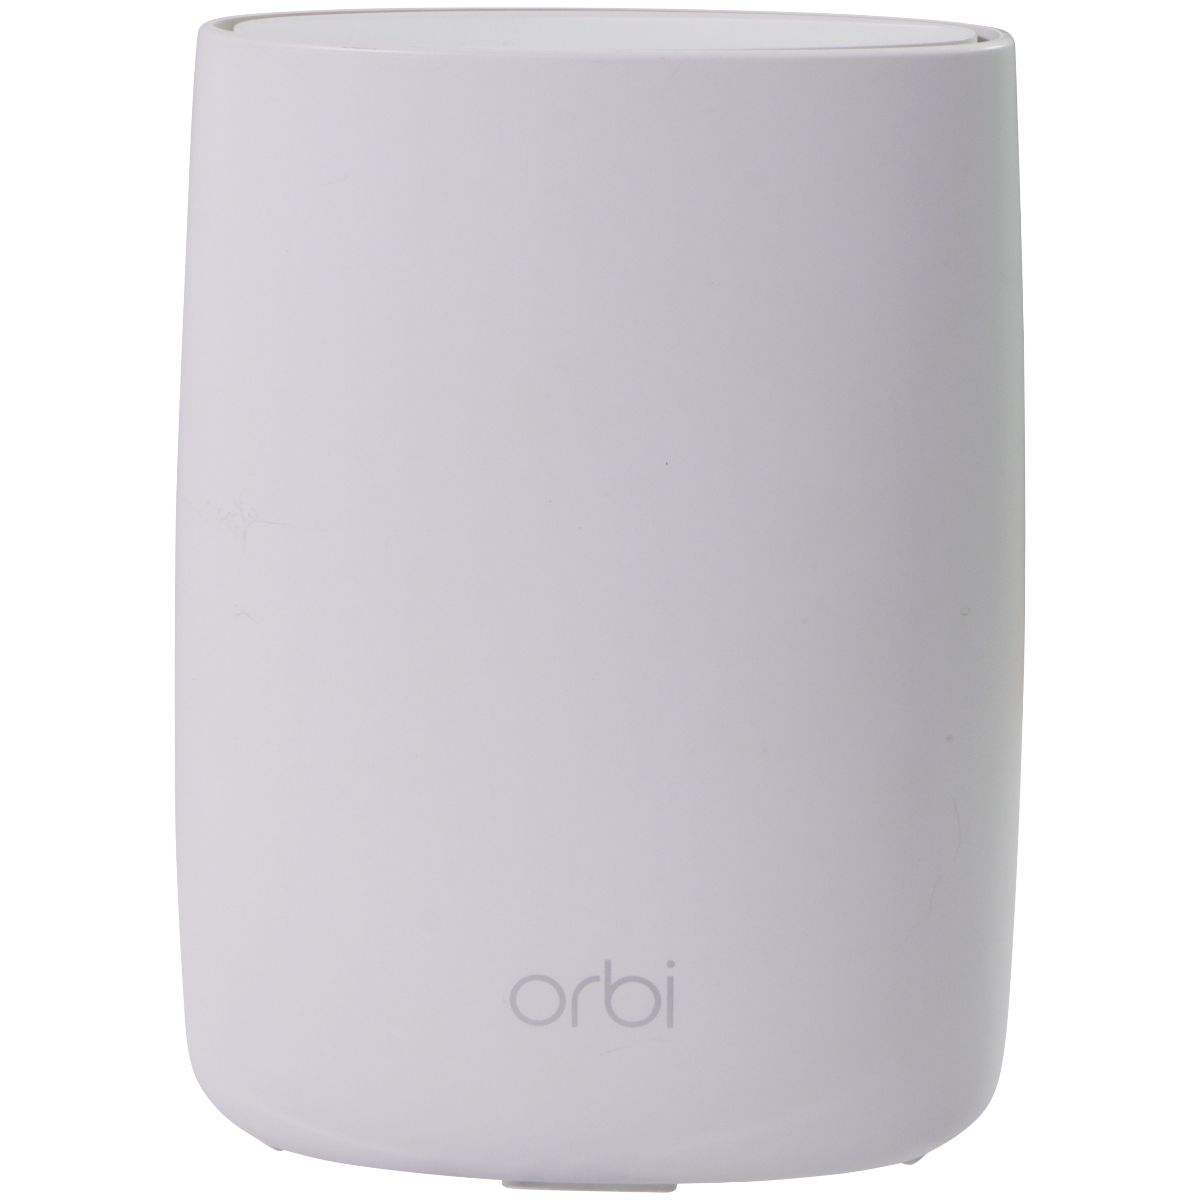 Netgear Orbi AC3000 Whole Home Tri-band WiFi System 1 Router & 2x Satellites